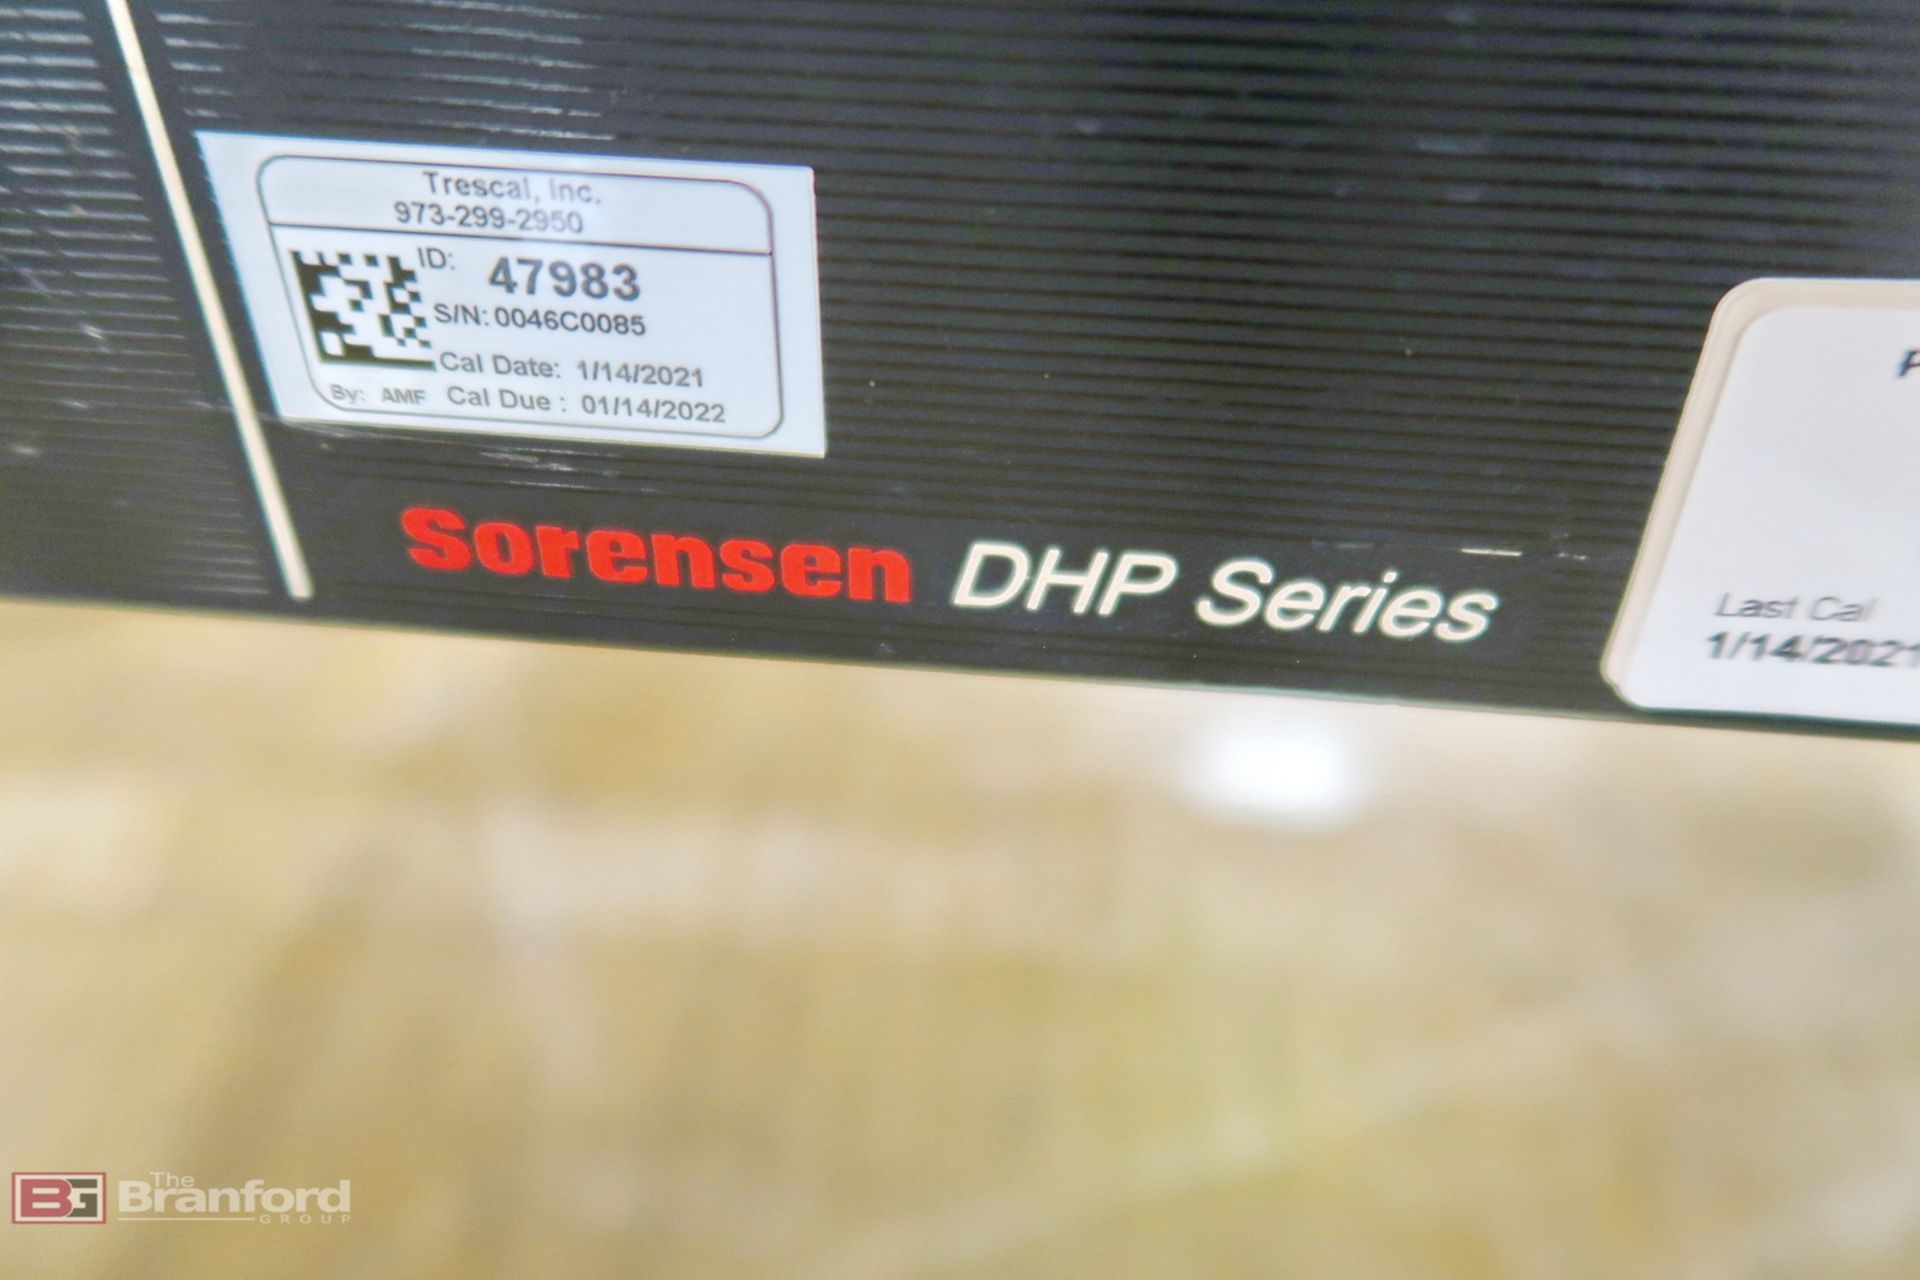 Sorensen dhp series power supply - Image 2 of 3